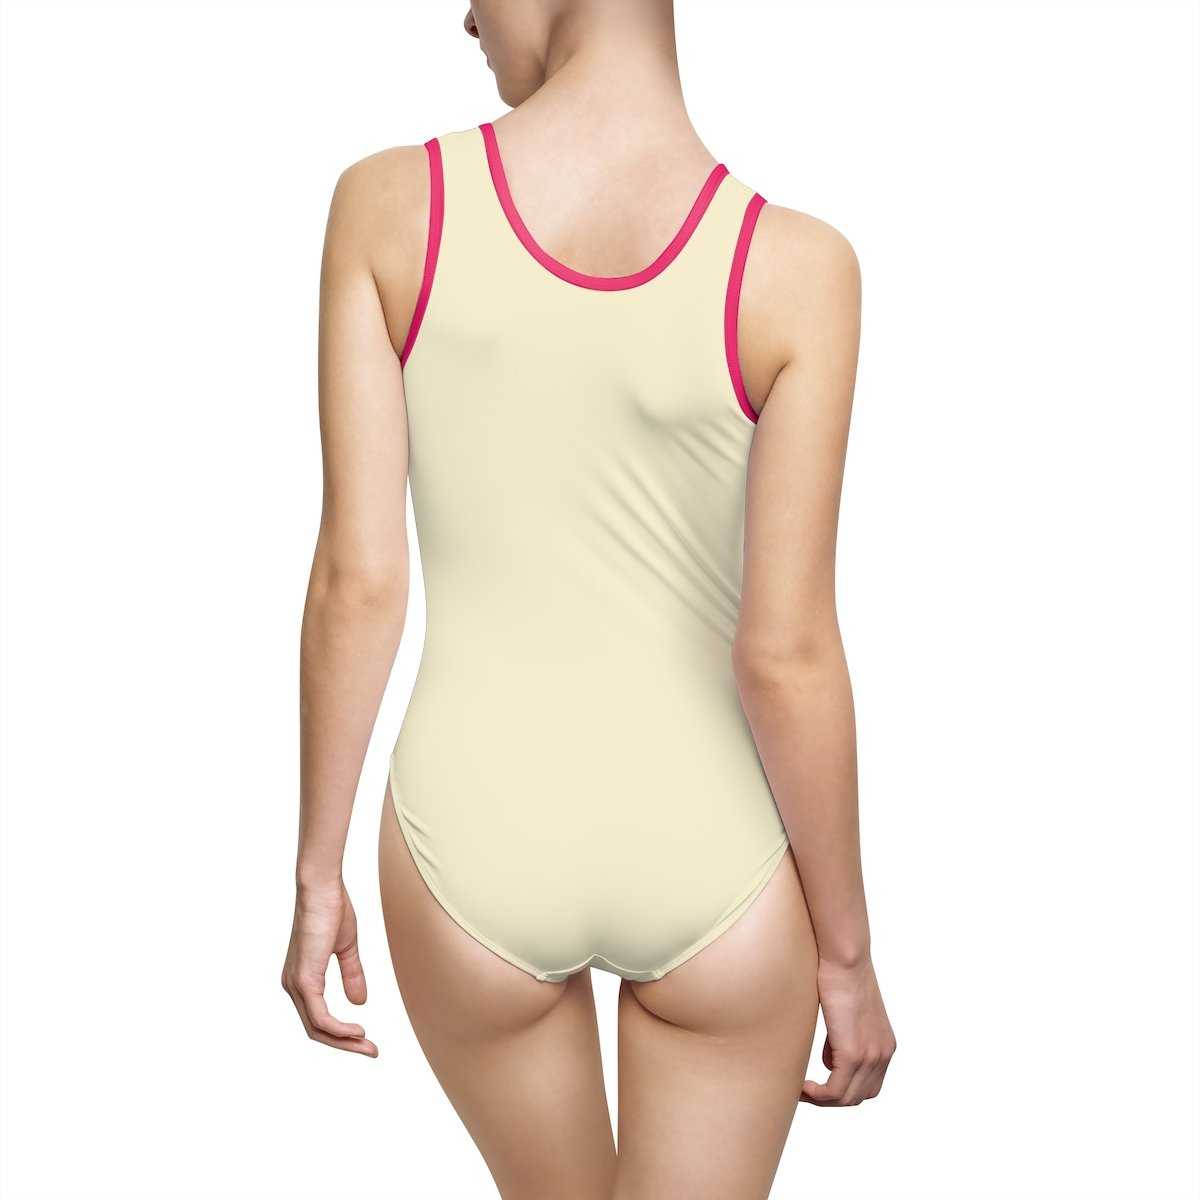 FREAK Swimsuit - Reminiscent of Sunset I - shopcontrabrands.com